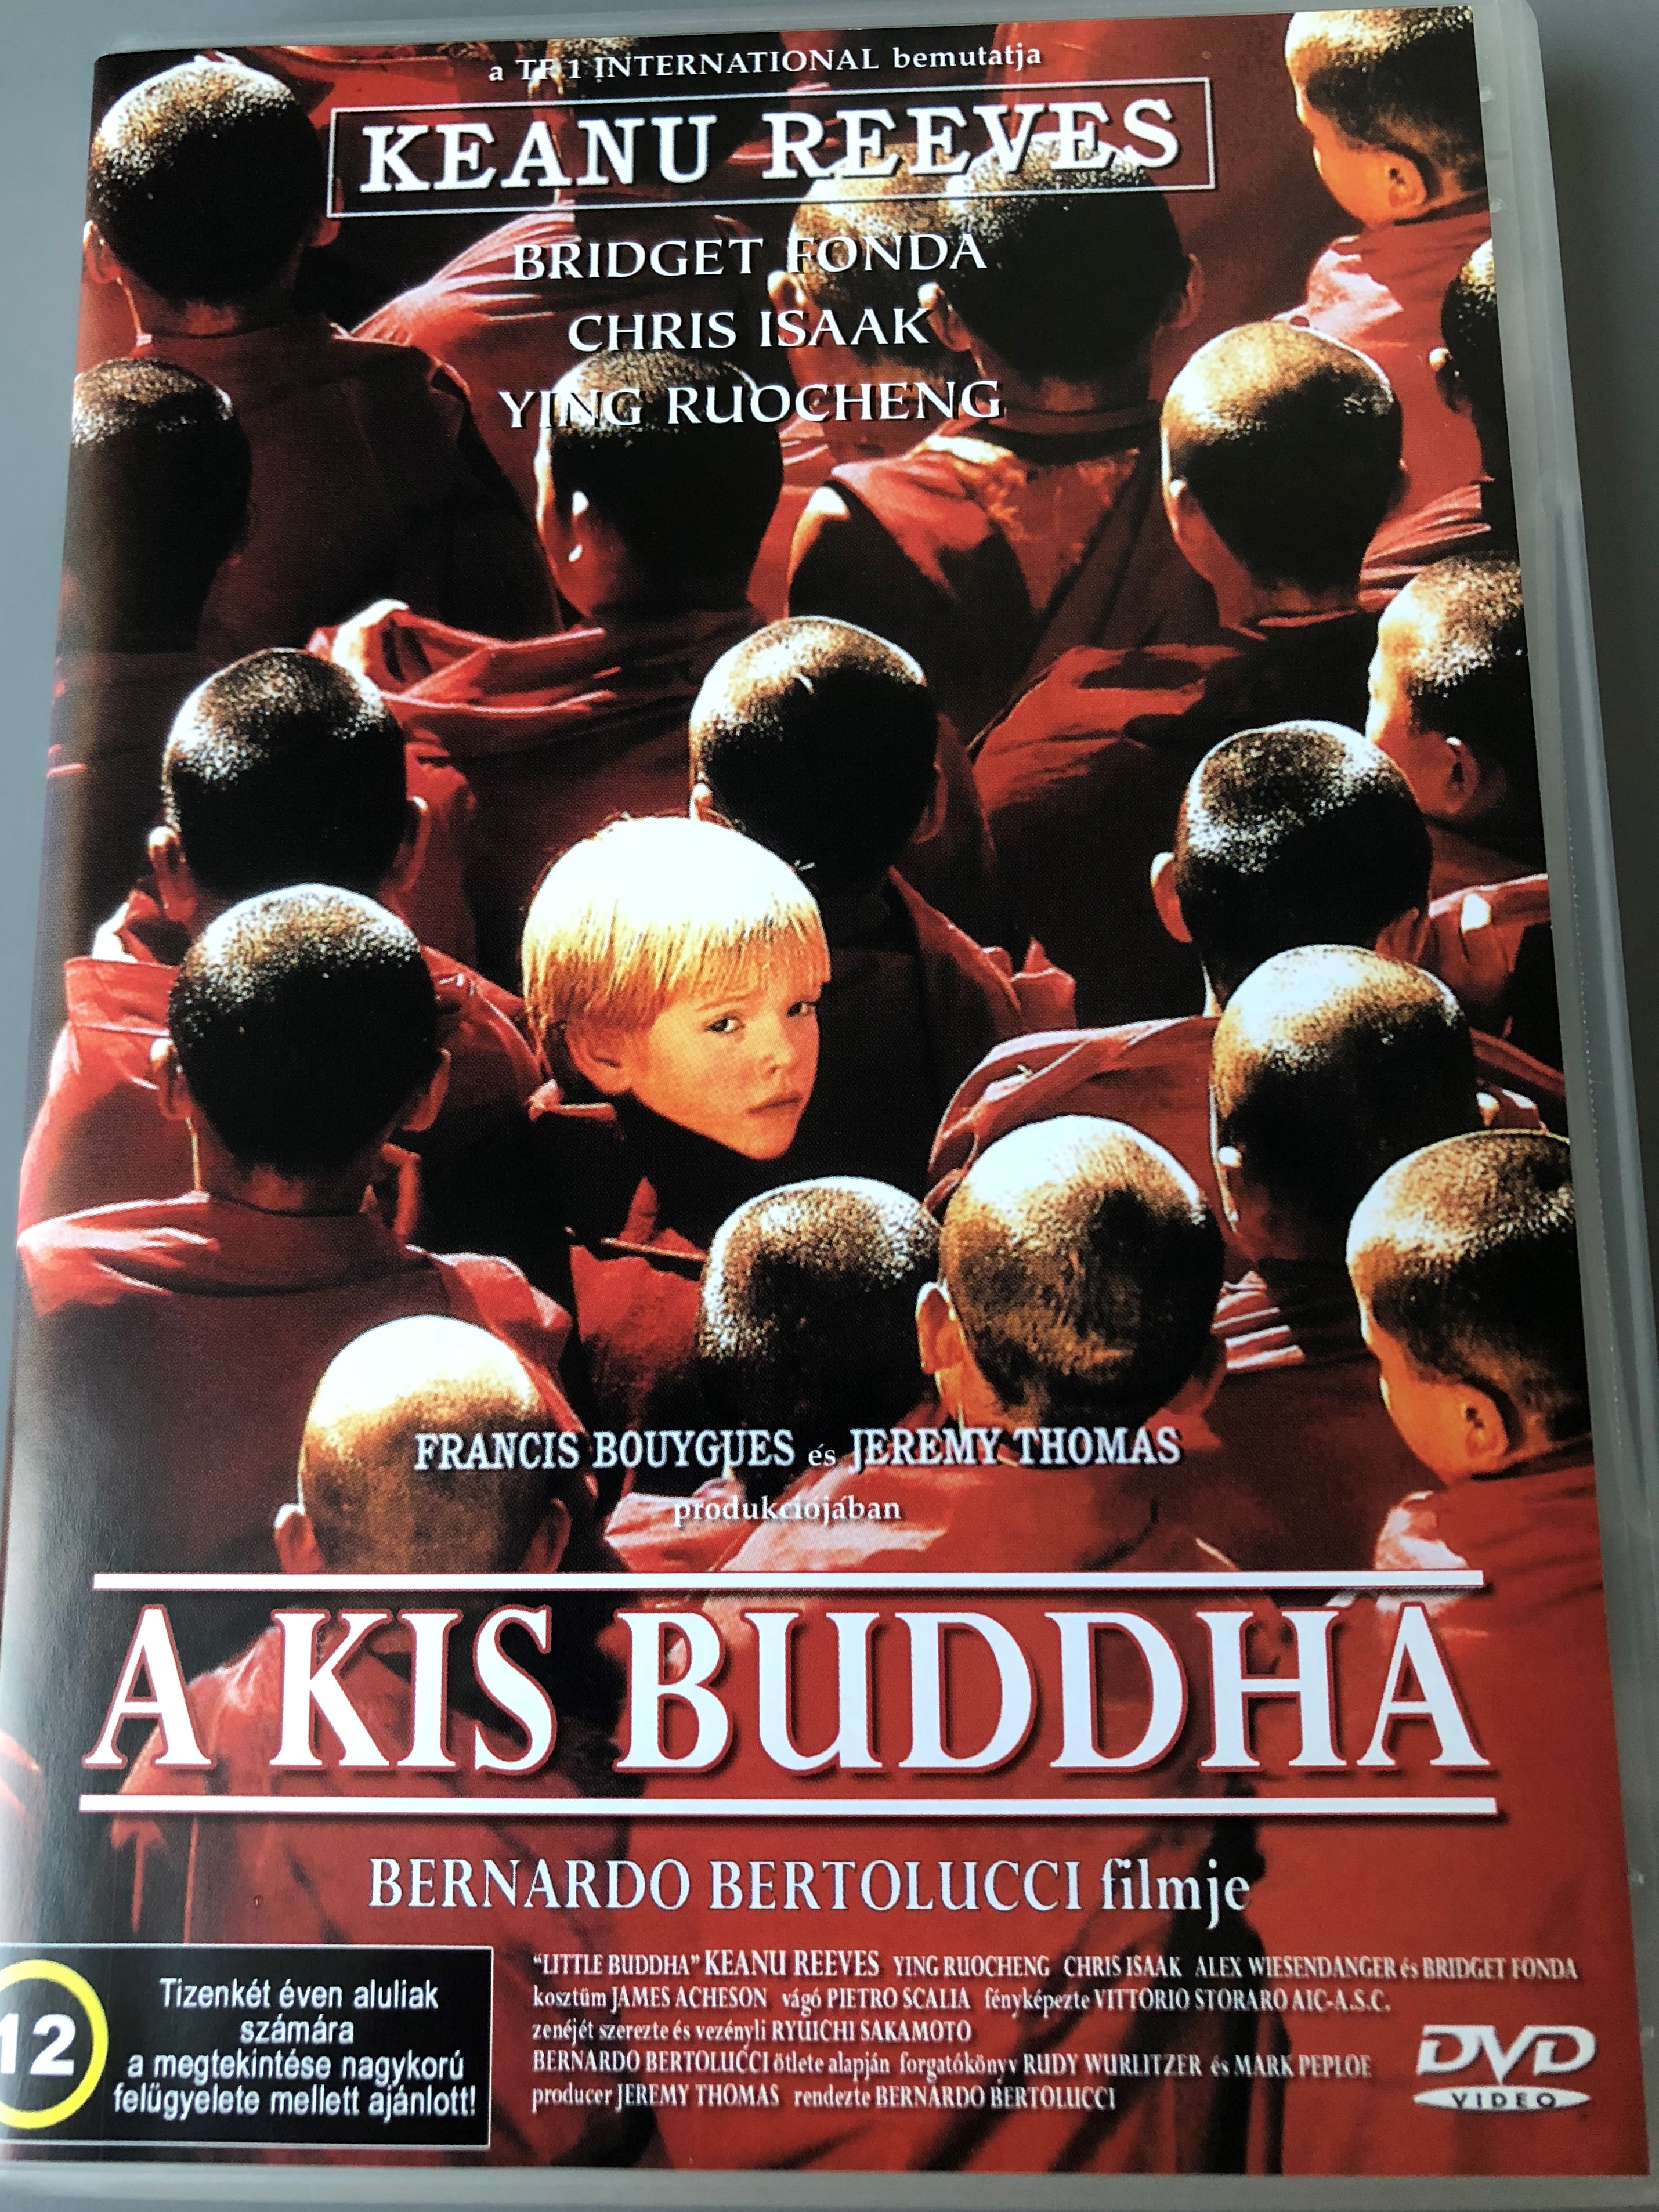 little-buddha-dvd-1993-a-kis-buddha-directed-by-bernardo-bertolucci-starring-keanu-reeves-bridget-fonda-chris-isaak-ying-ruocheng-1-.jpg